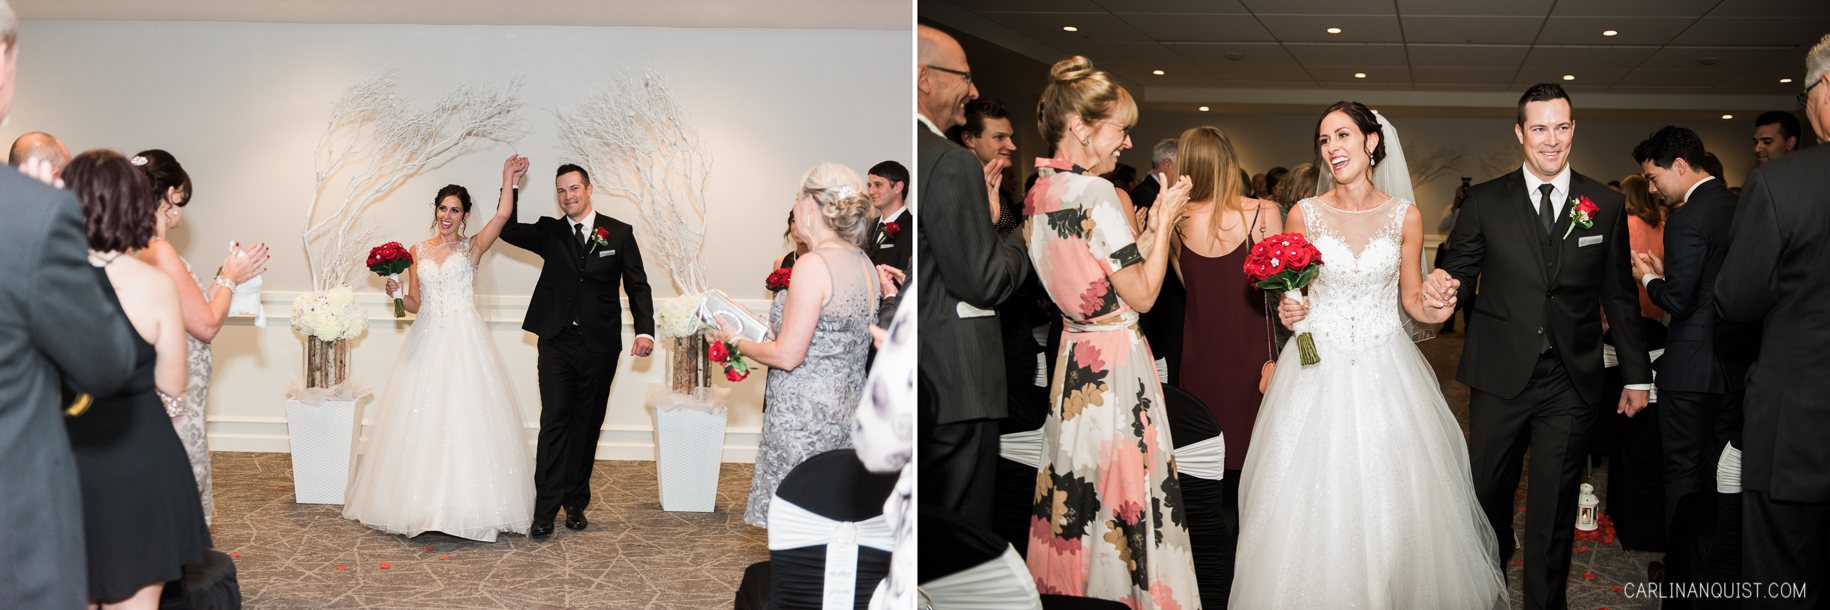 Wedding Recessional | Calgary Winter Club Wedding Photographer